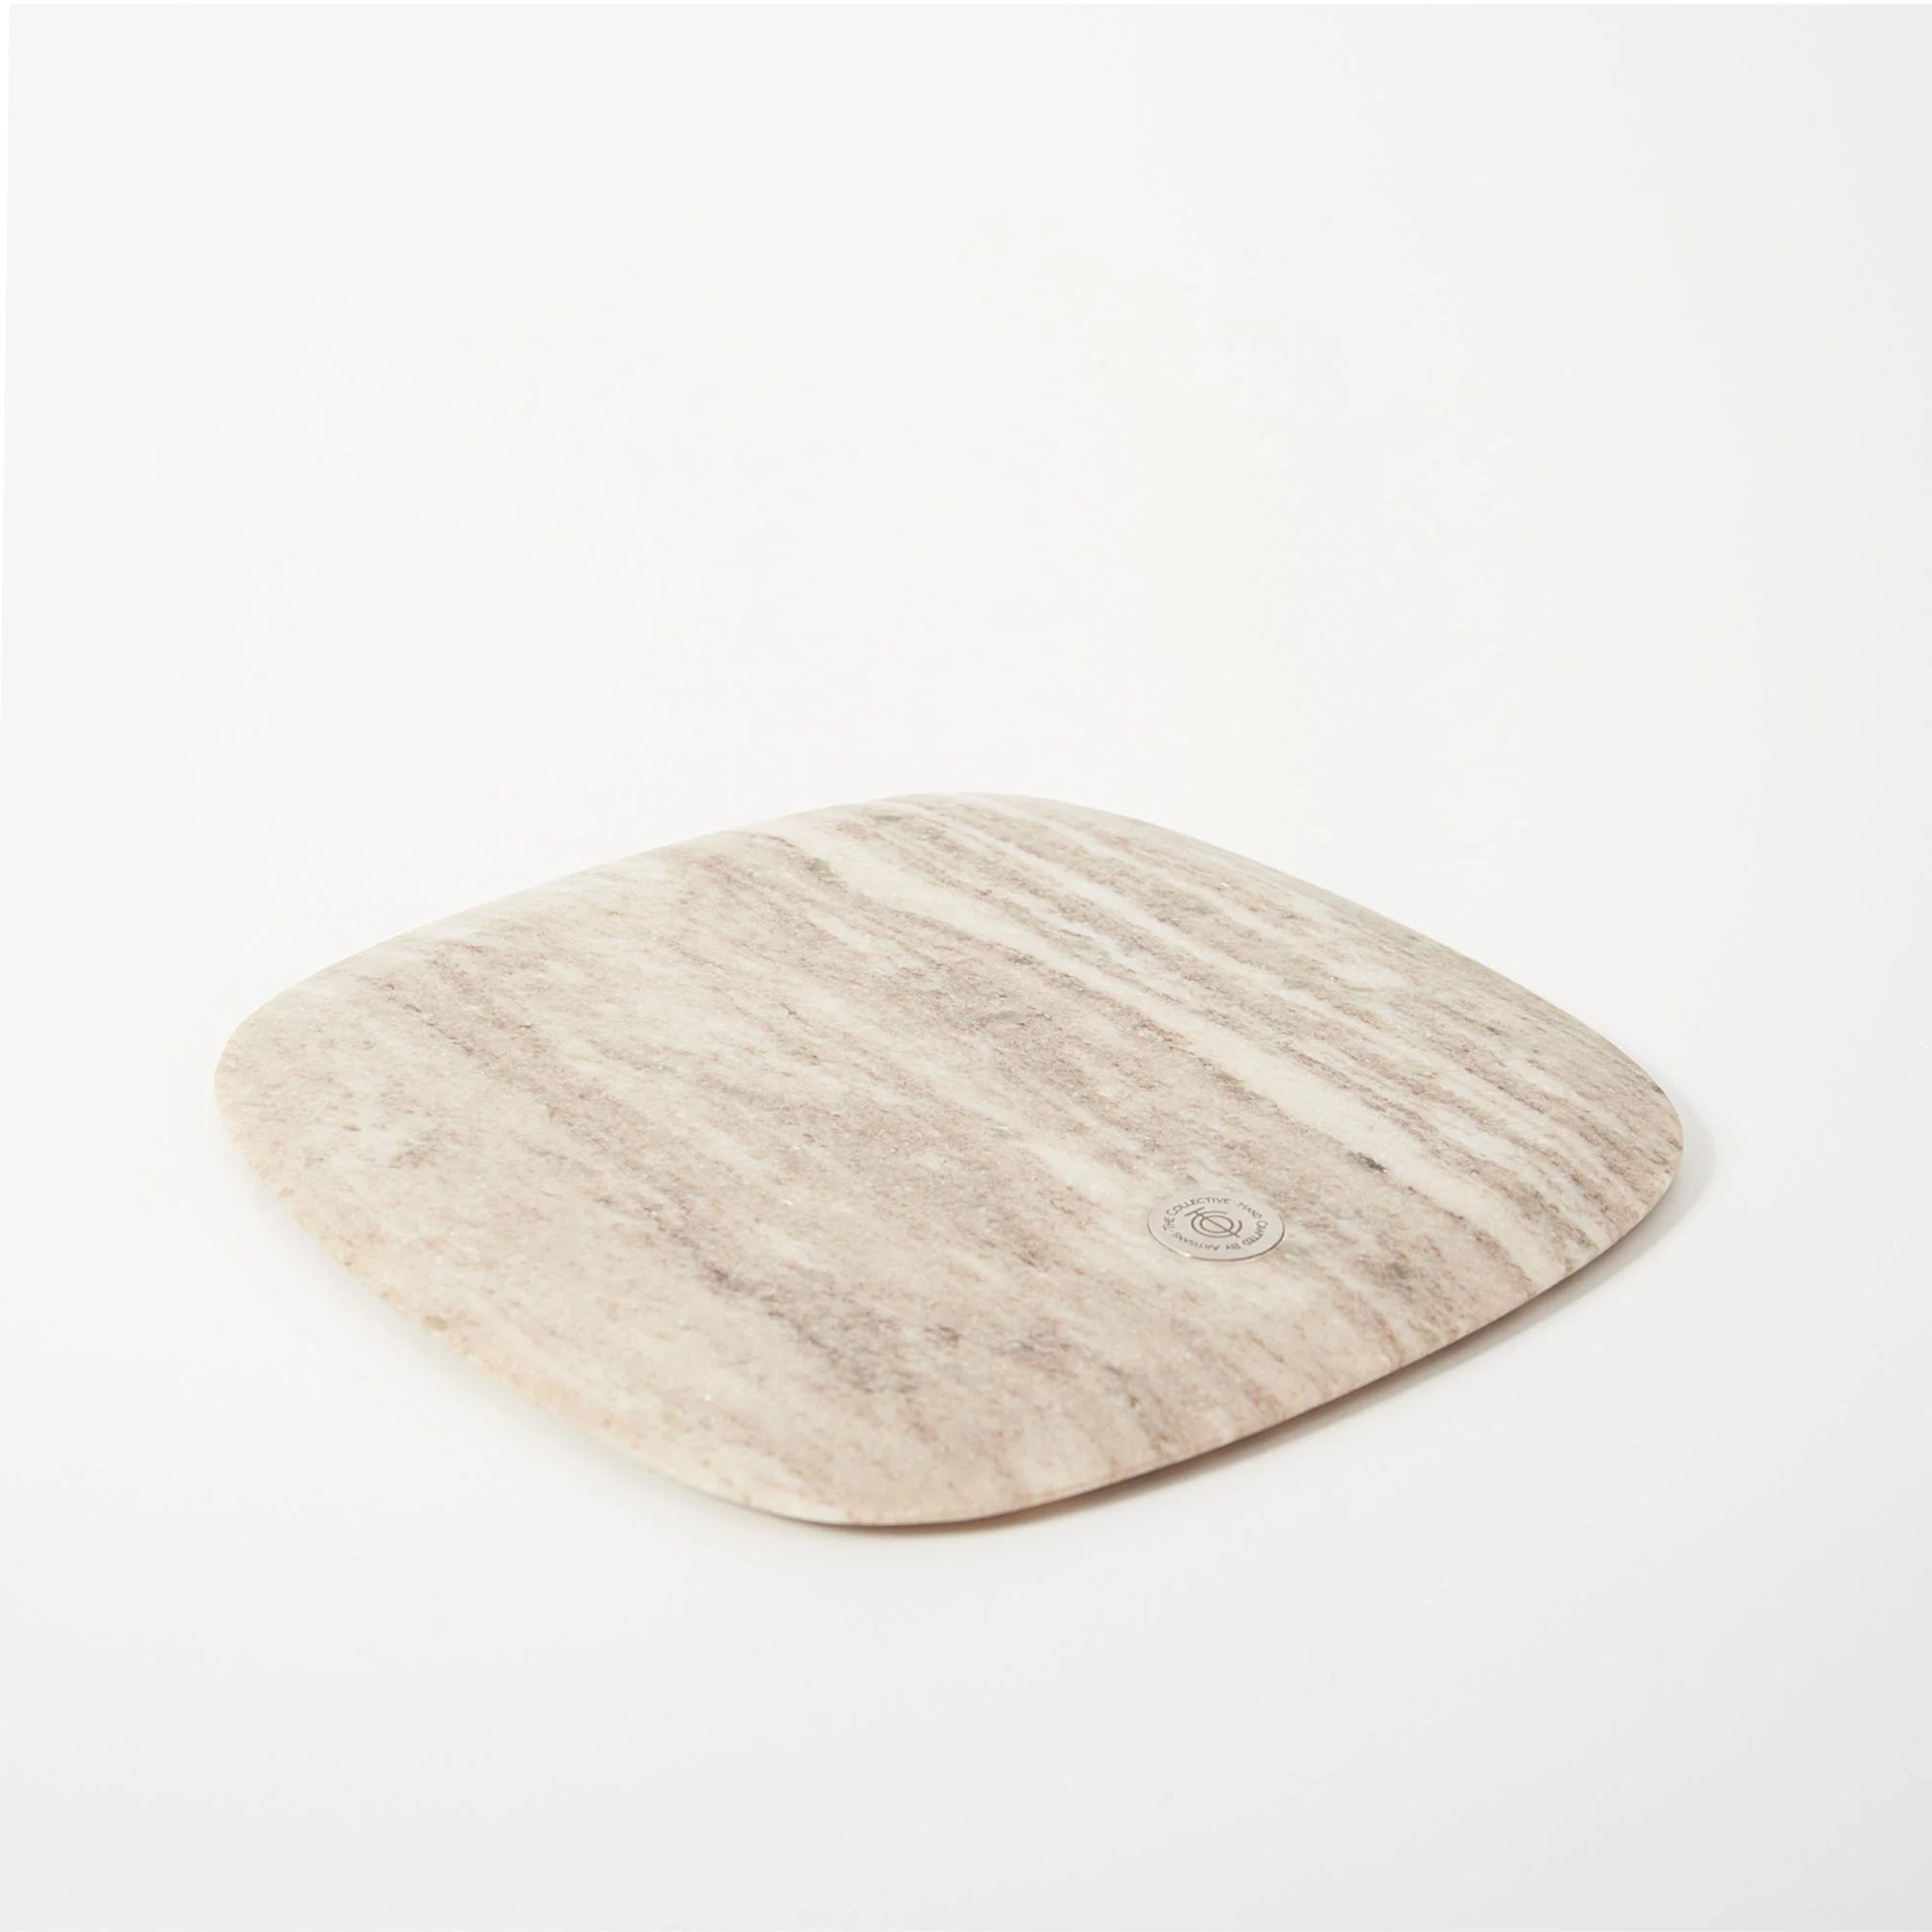 Granada Marble Board- Medium